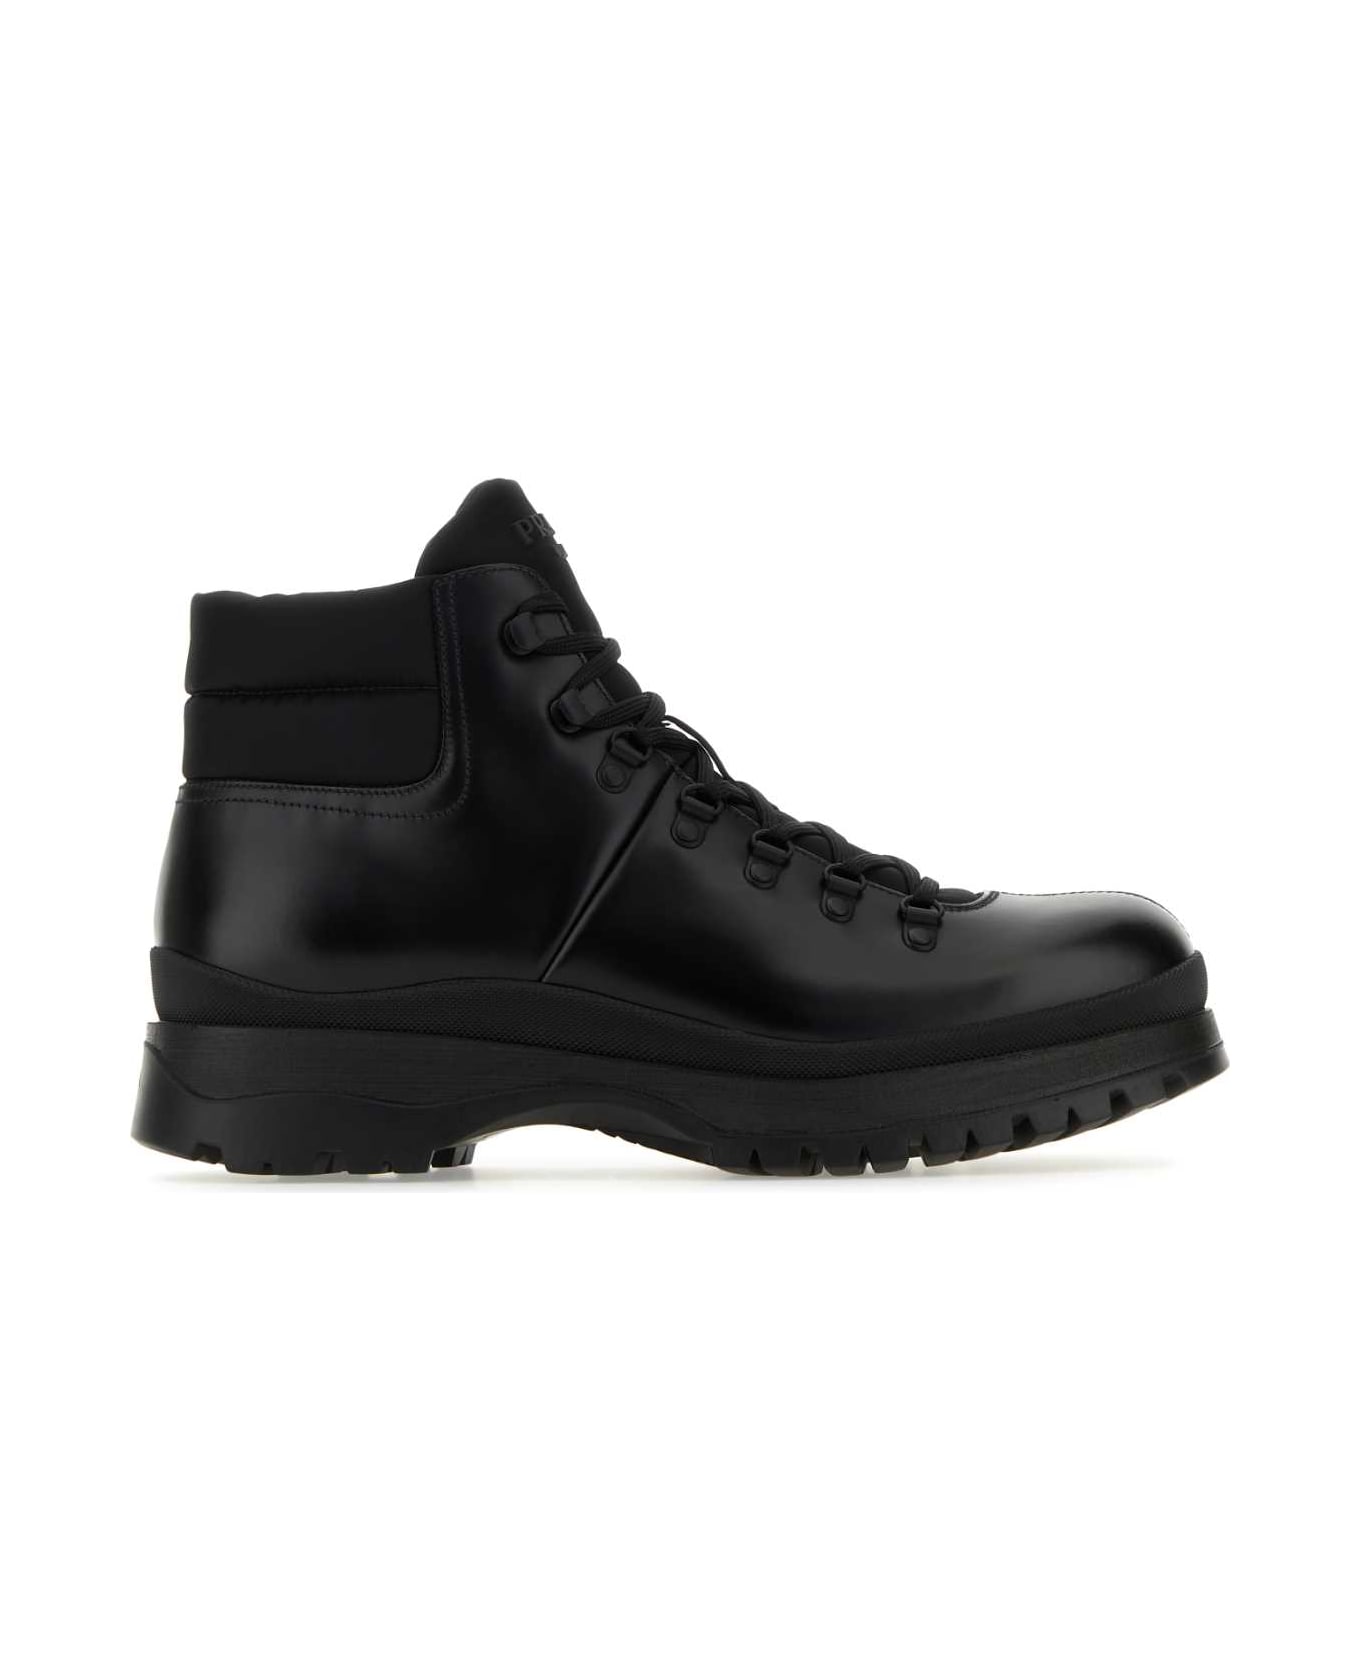 Prada Black Re-nylon And Leather Brixxen Ankle Boots - F0002 ブーツ